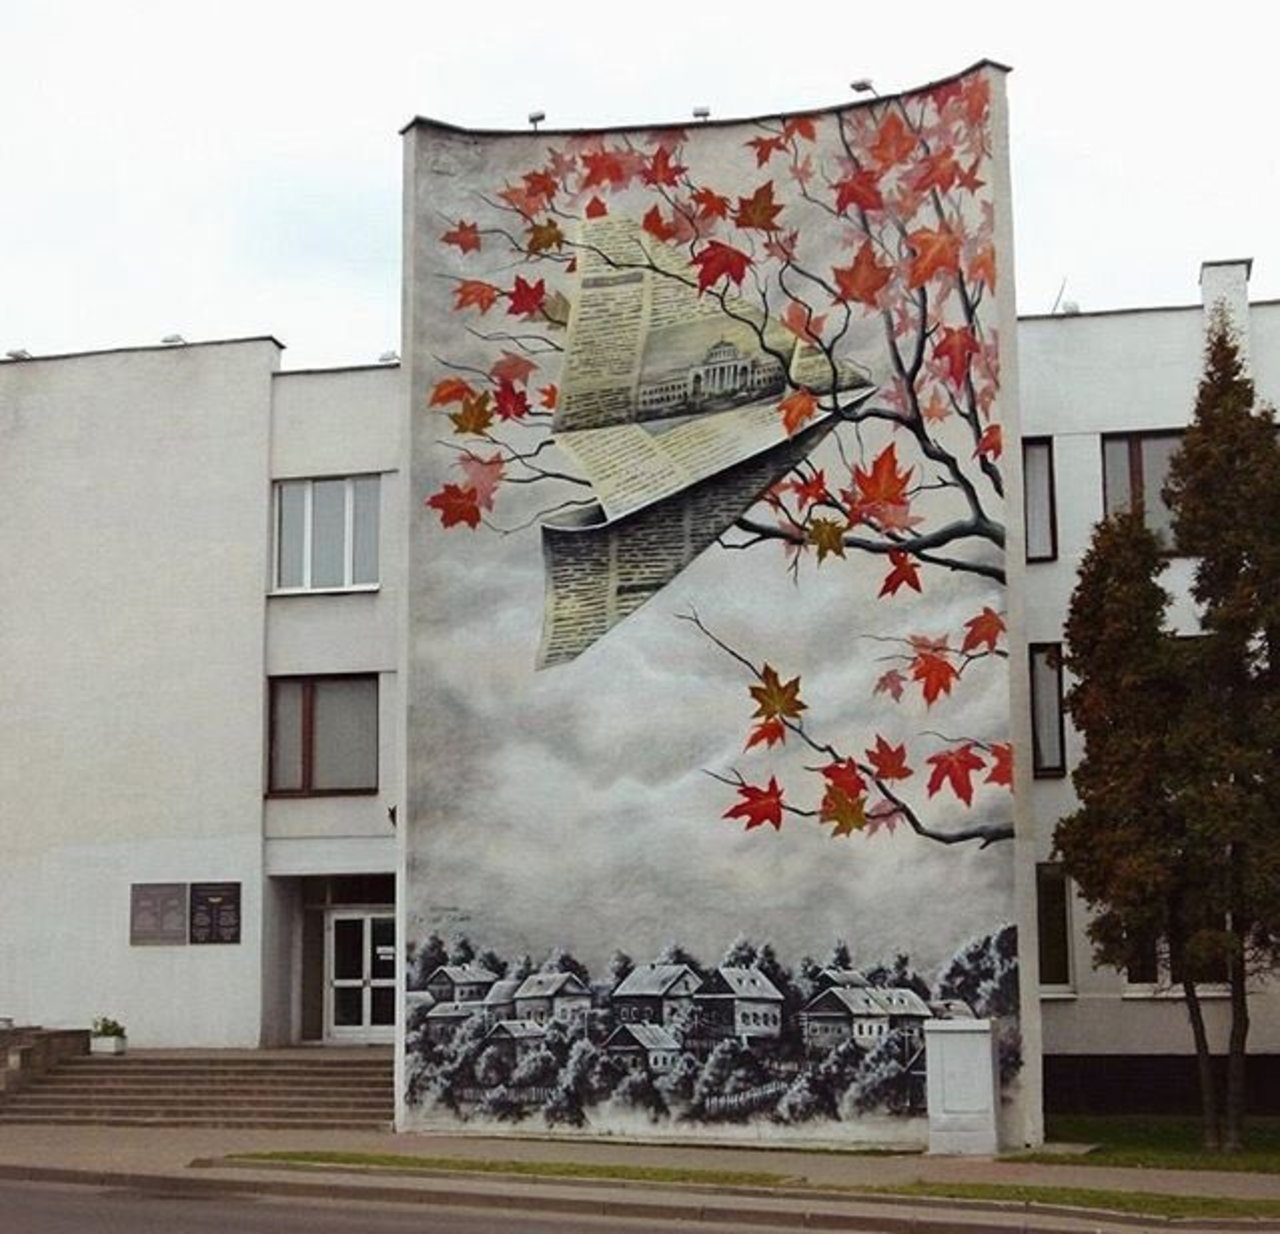 RT kick_idea New Street Art by MUTUS in Belarus 

#art #graffiti #mural #streetart https://t.co/pdRcb8cifN